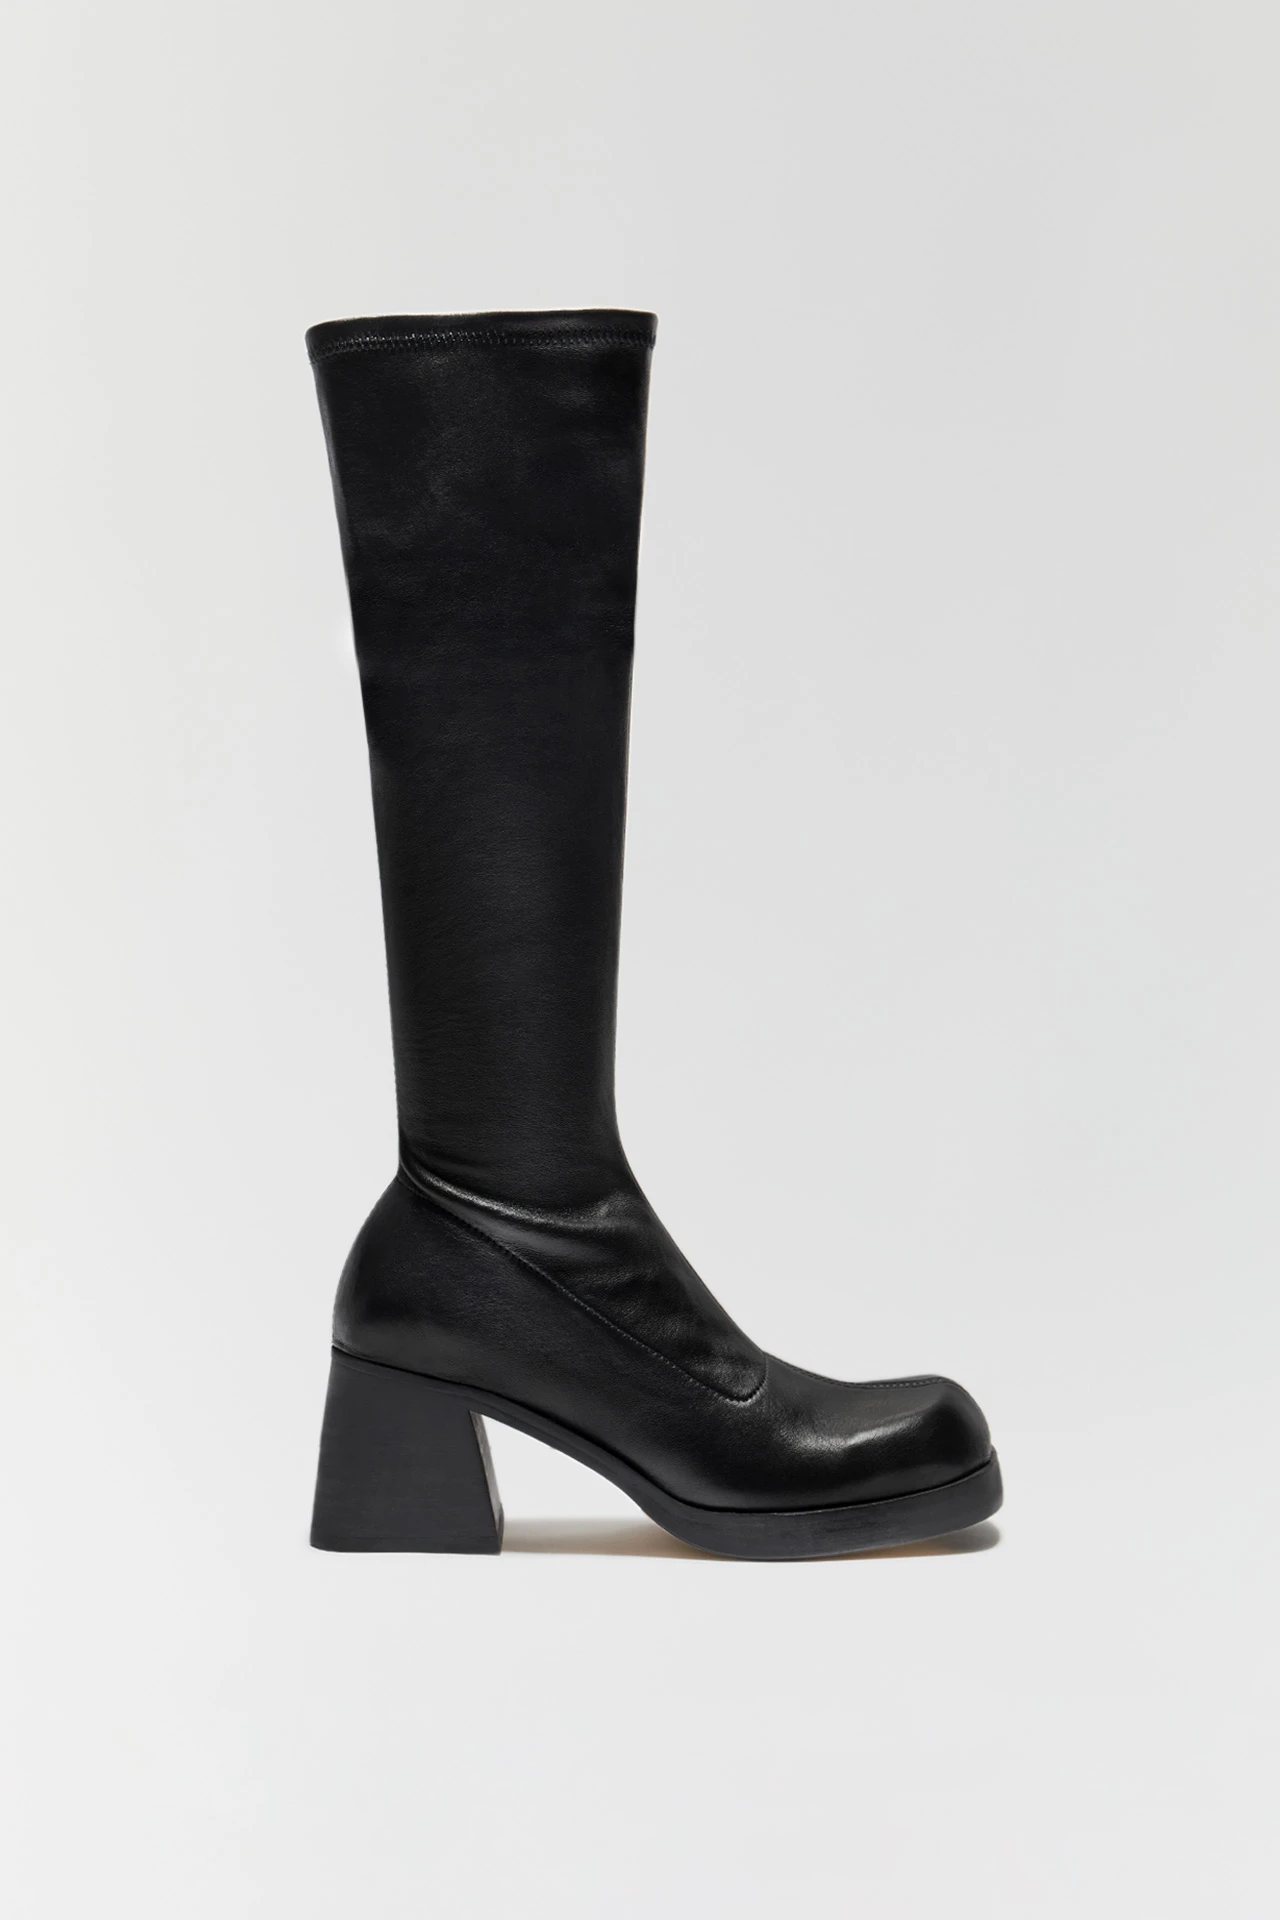 miista-hedy-black-stretch-nappa-boots-1